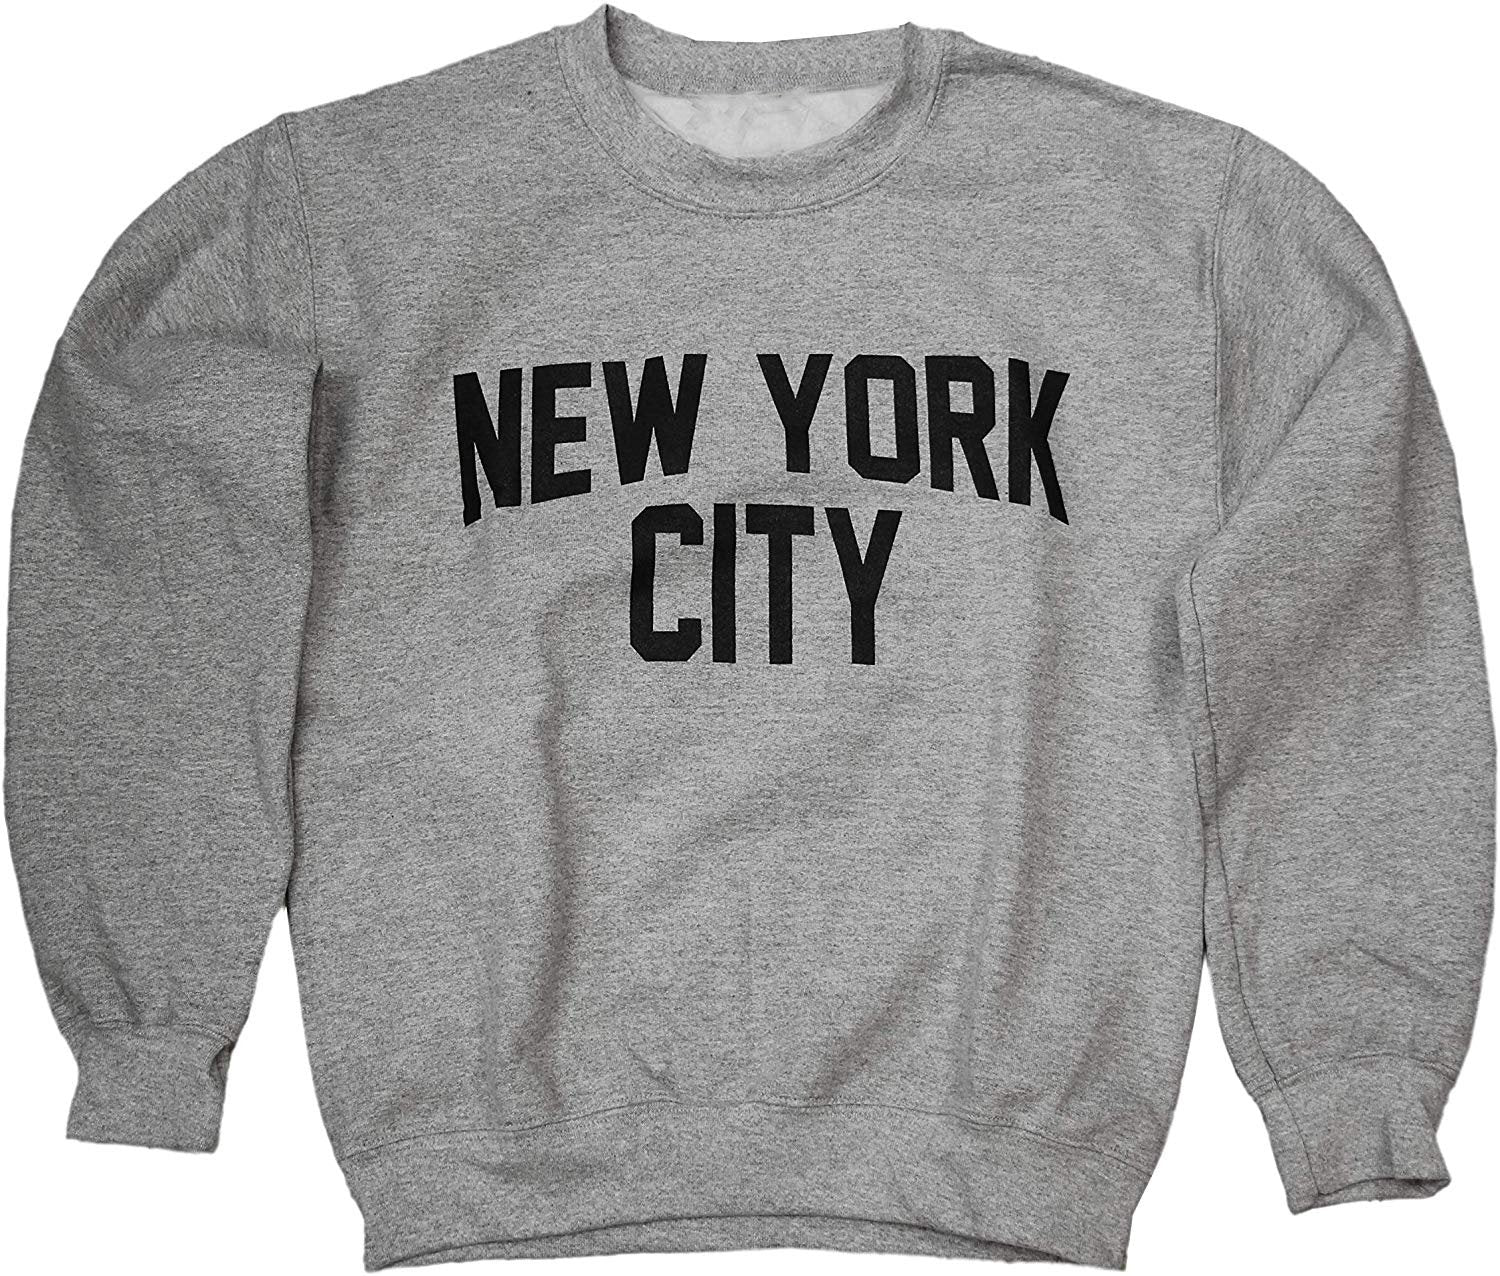 New York City Crewneck Sweatshirt Screen-Printed Lennon Heather Gray